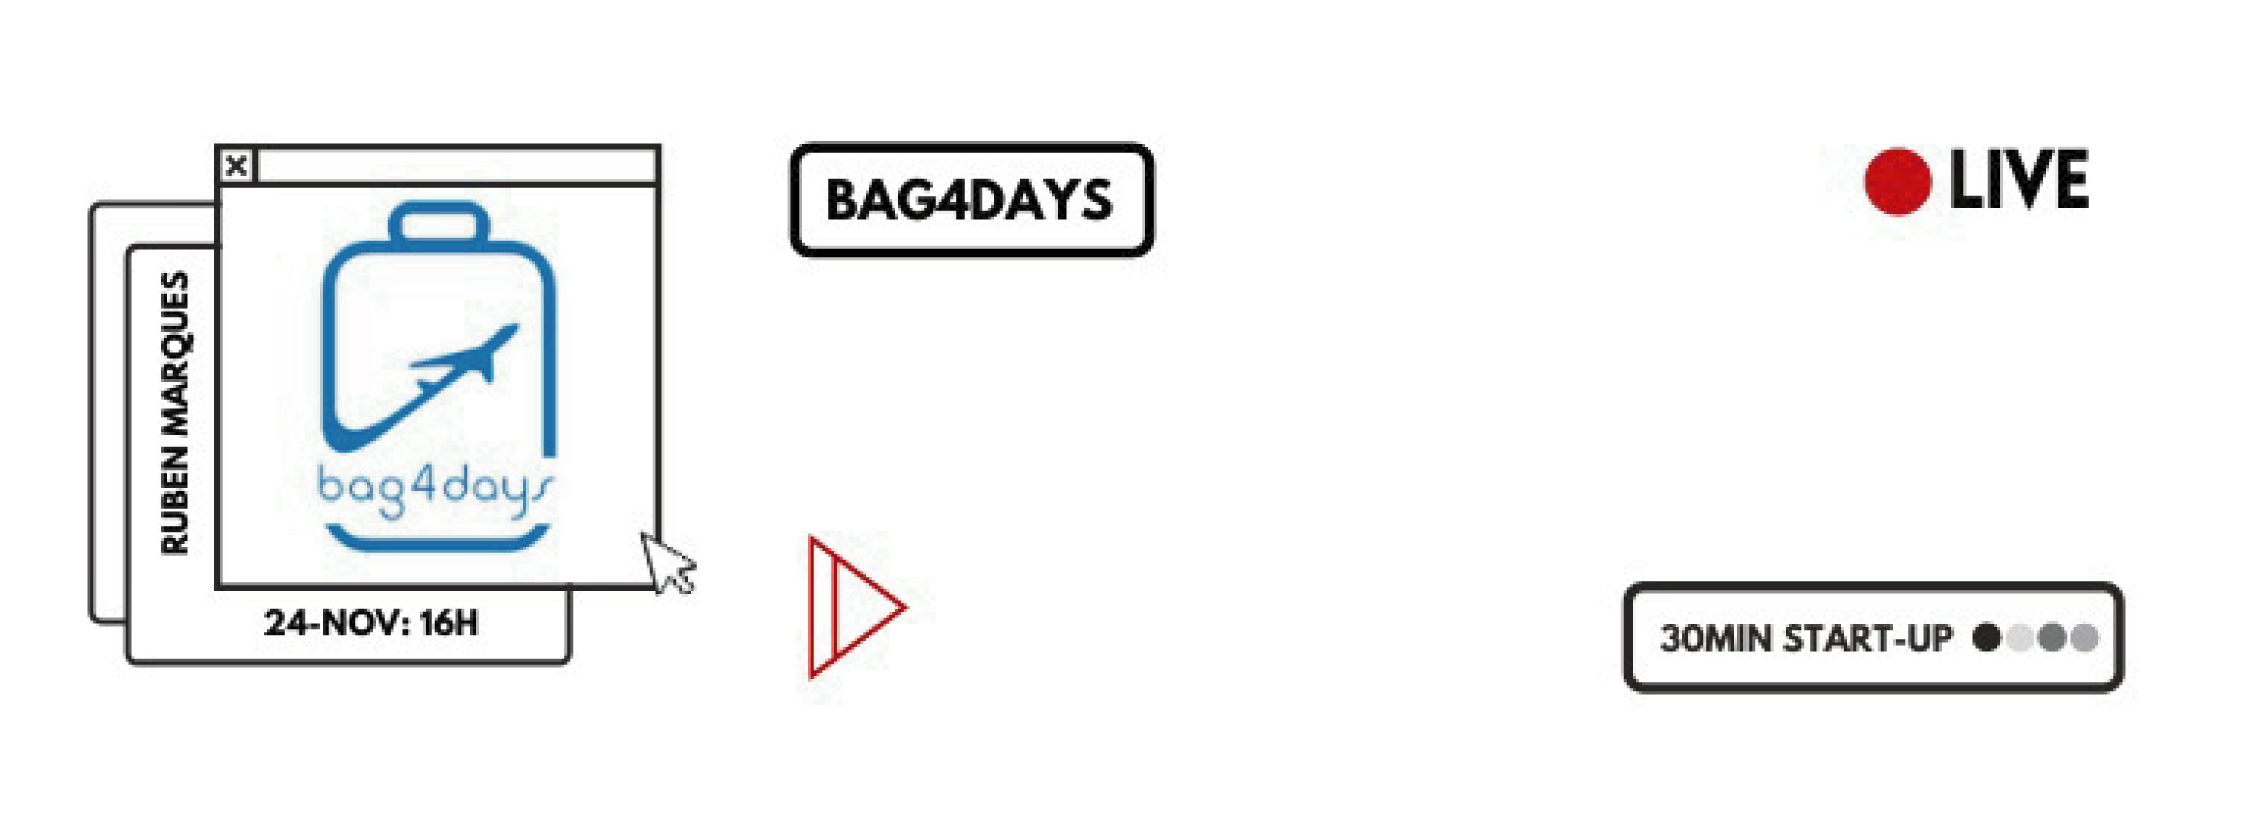 bag4days